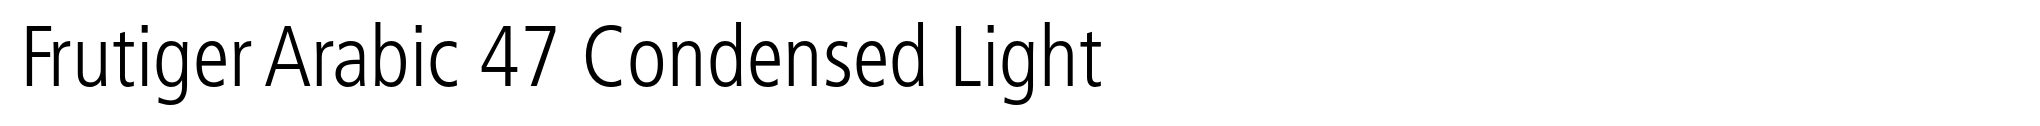 Frutiger Arabic 47 Condensed Light image